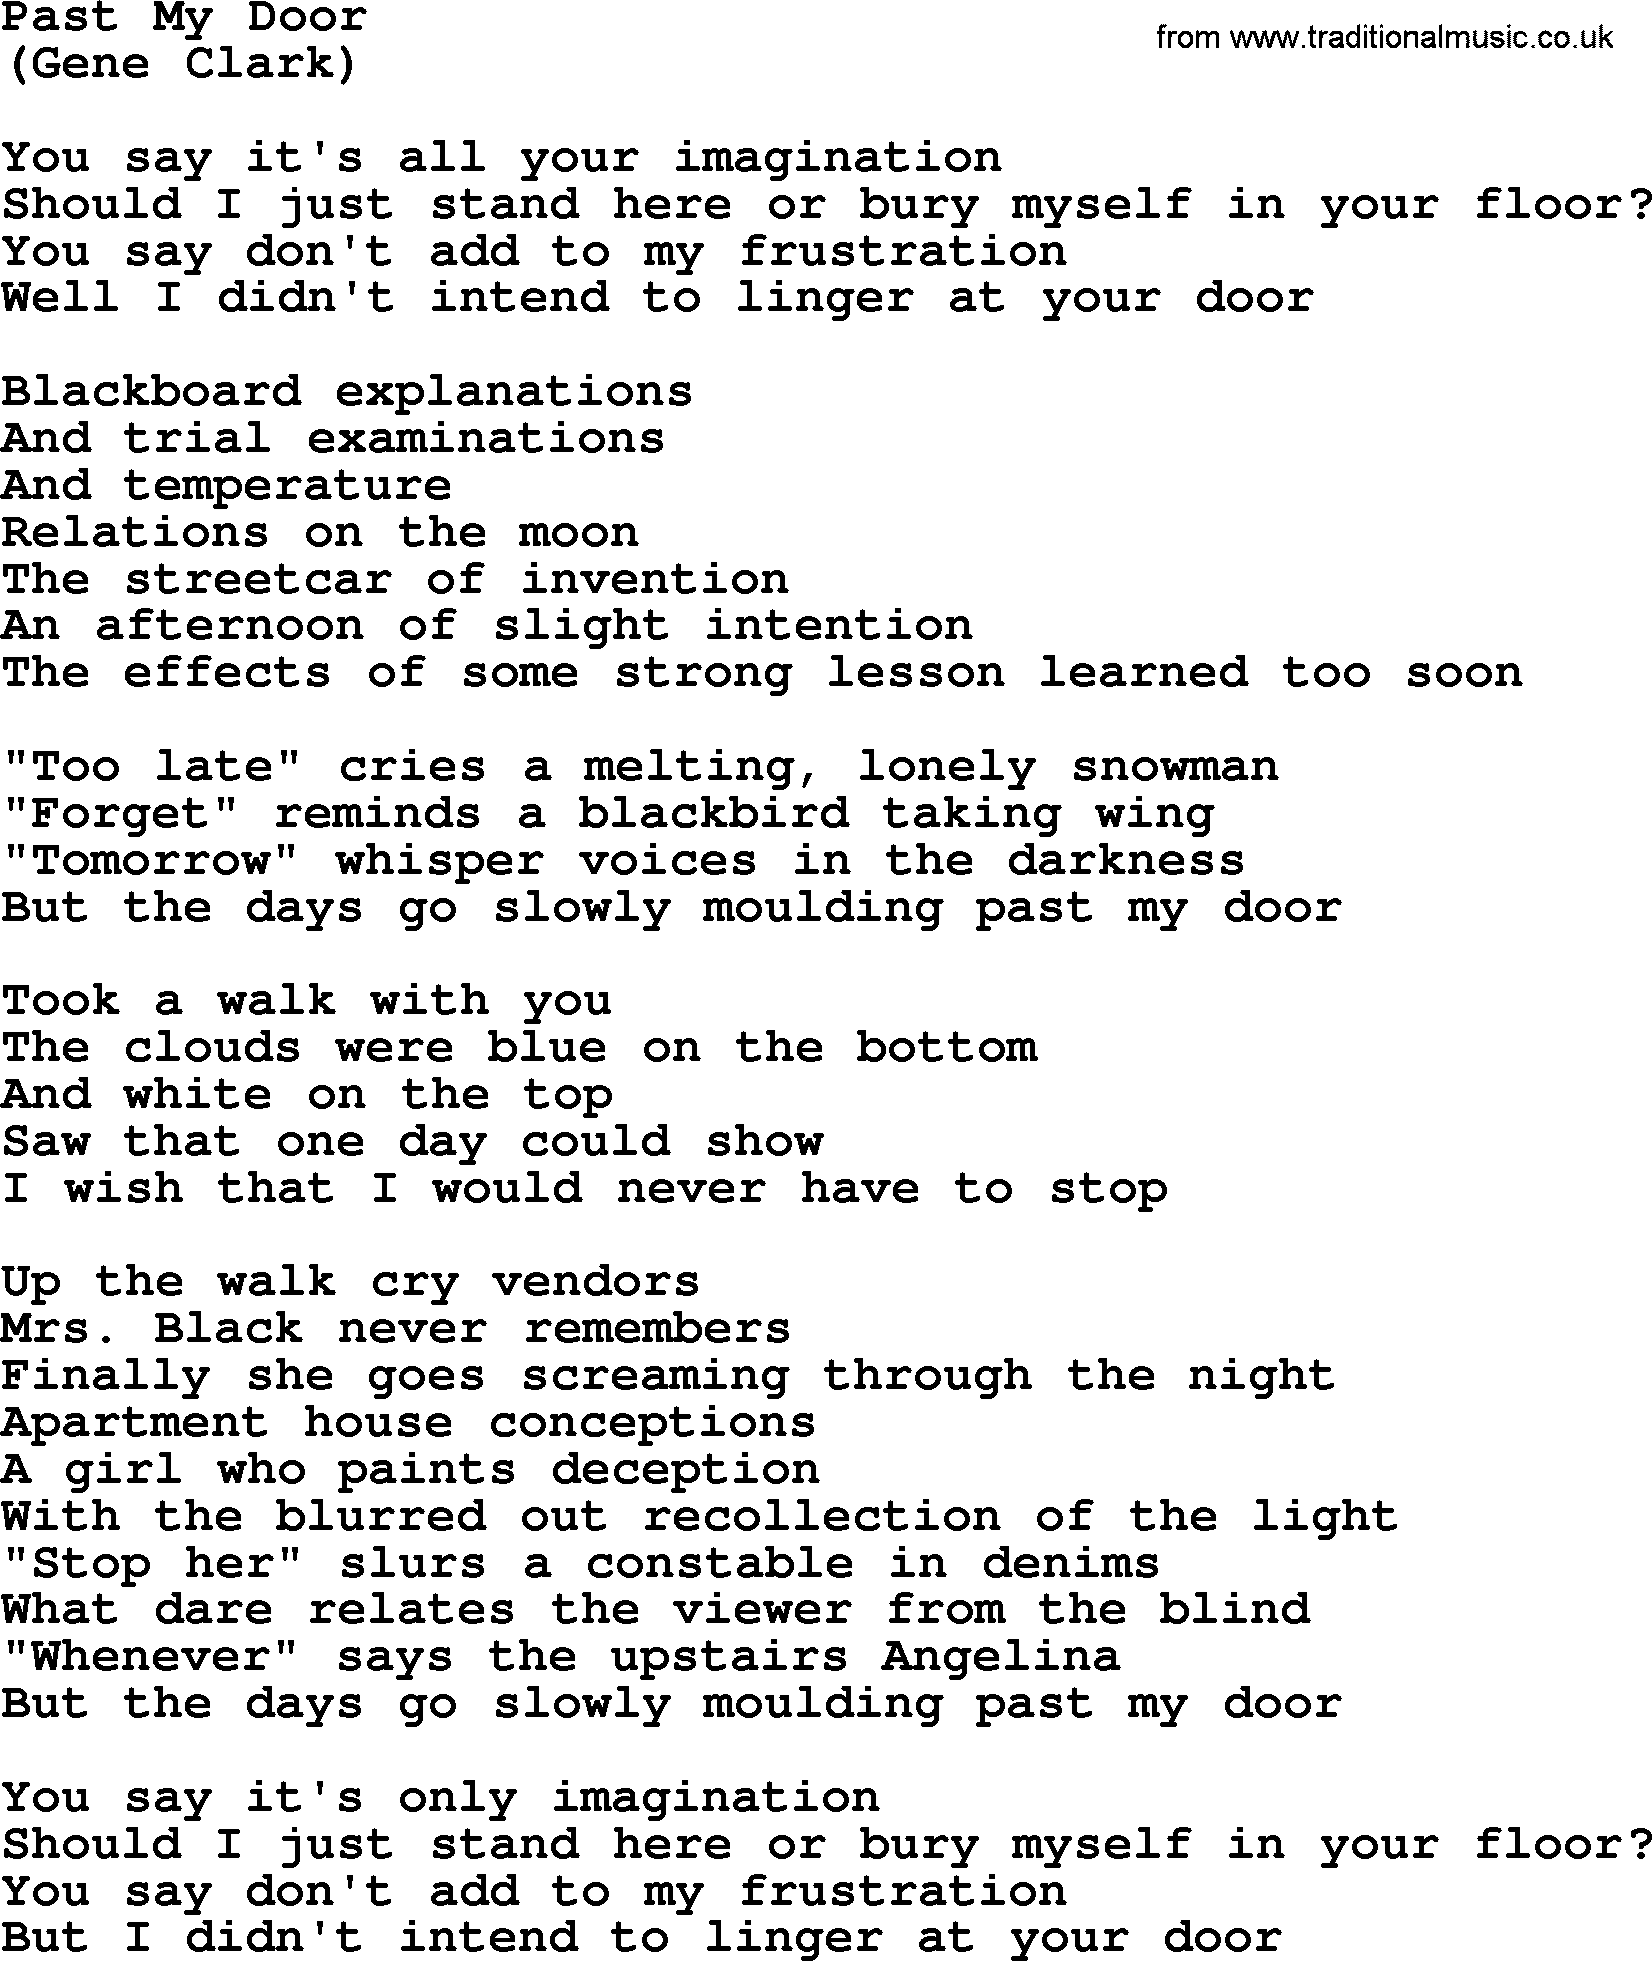 The Byrds song Past My Door, lyrics